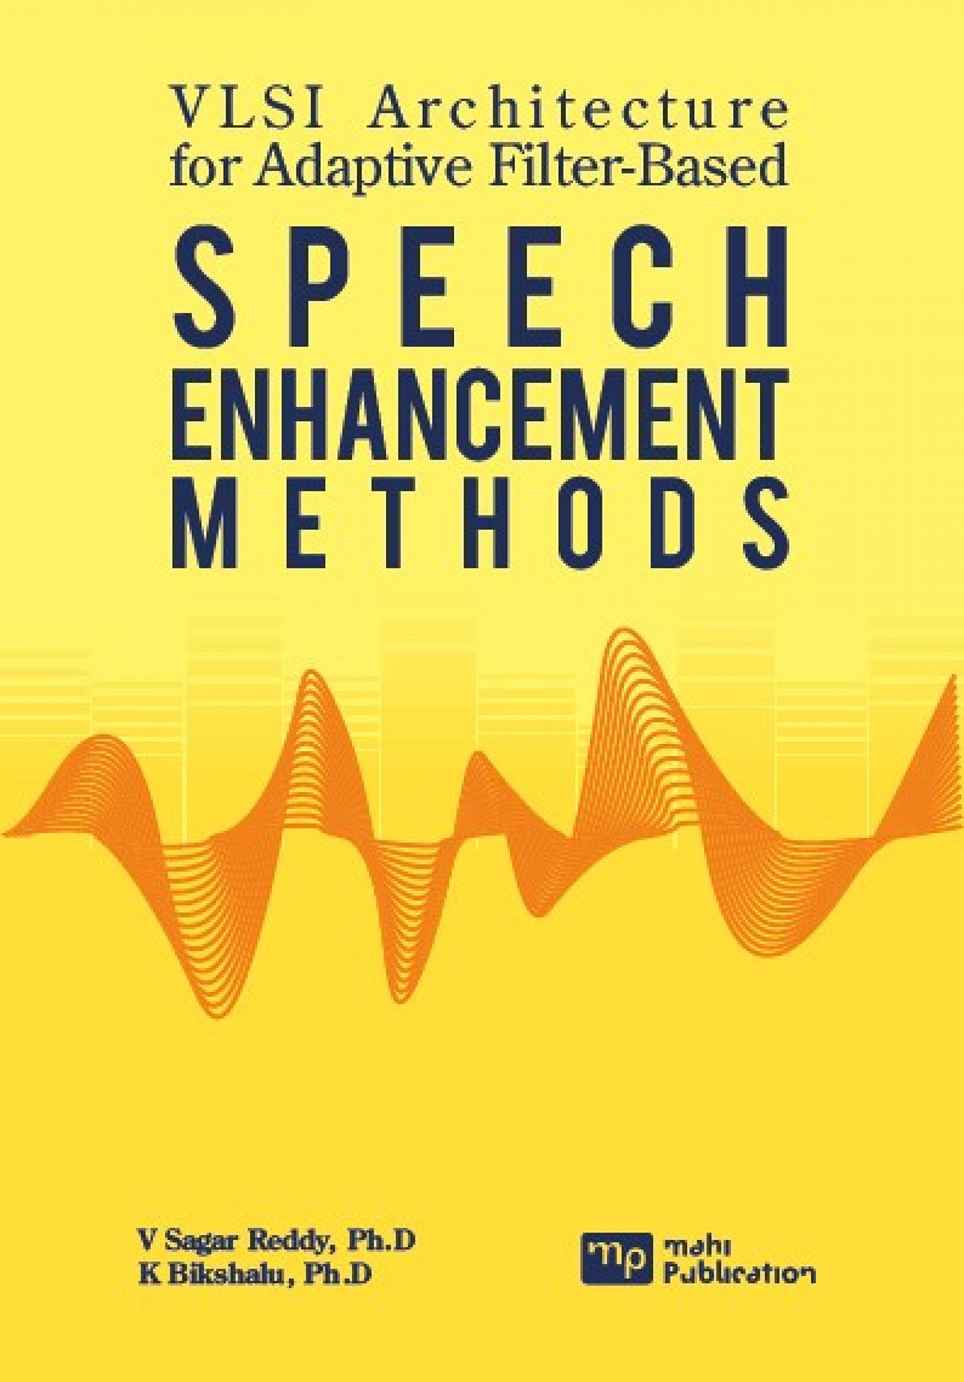 VLSI Architecture for Adaptive Filter-based Speech Enhancement Methods